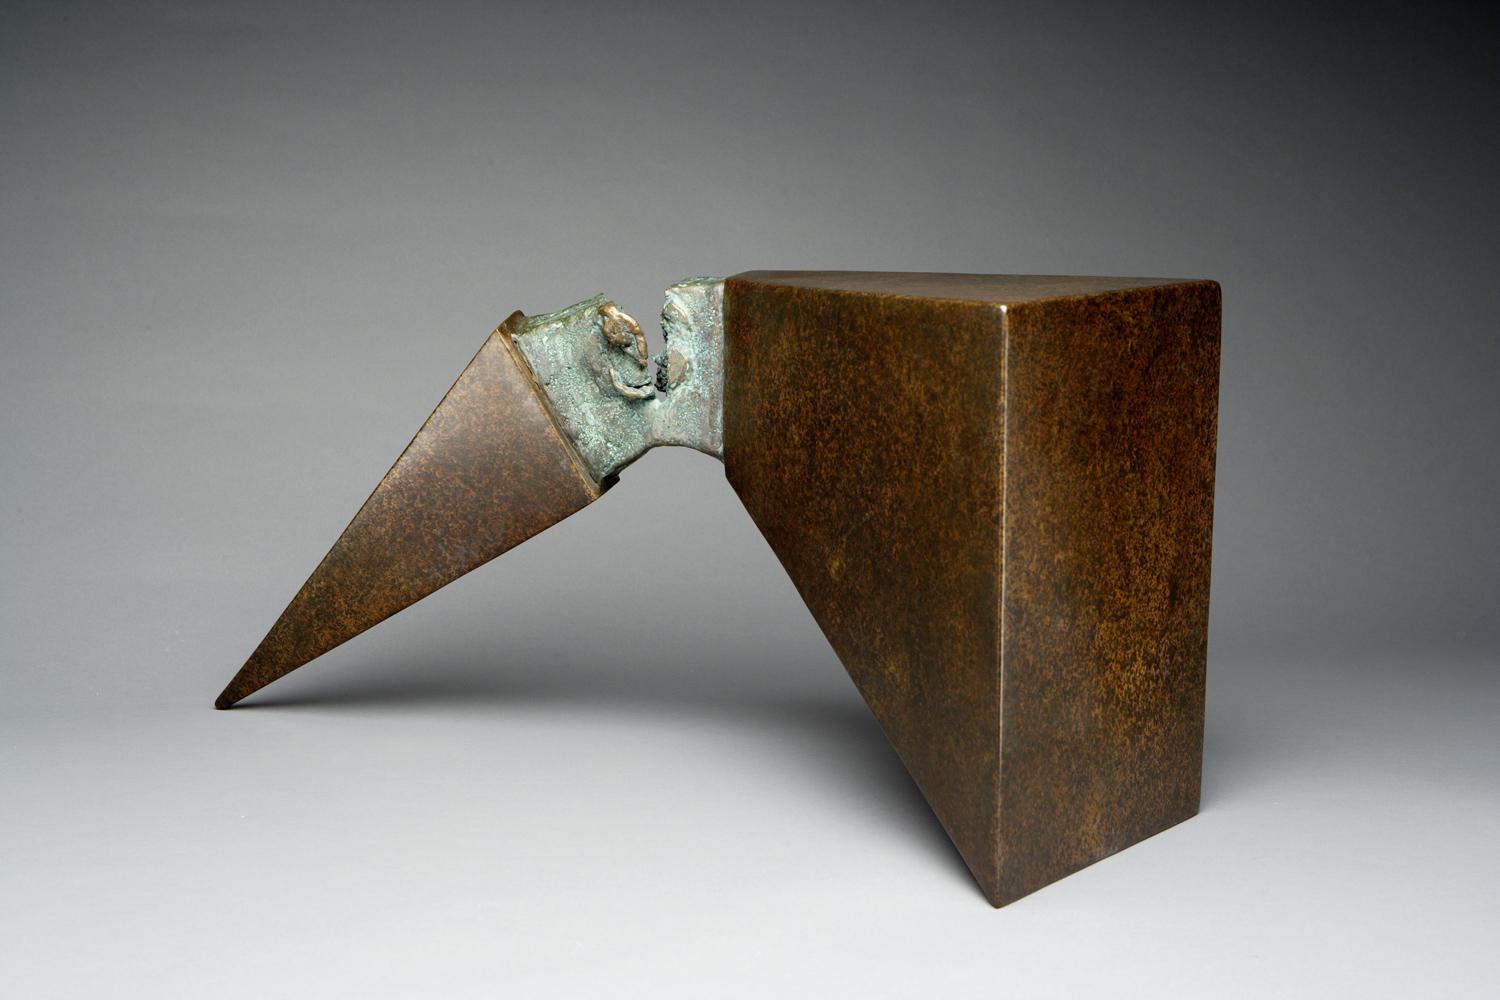 Frank Morbillo Abstract Sculpture - "Emphasis" unique bronze sculpture